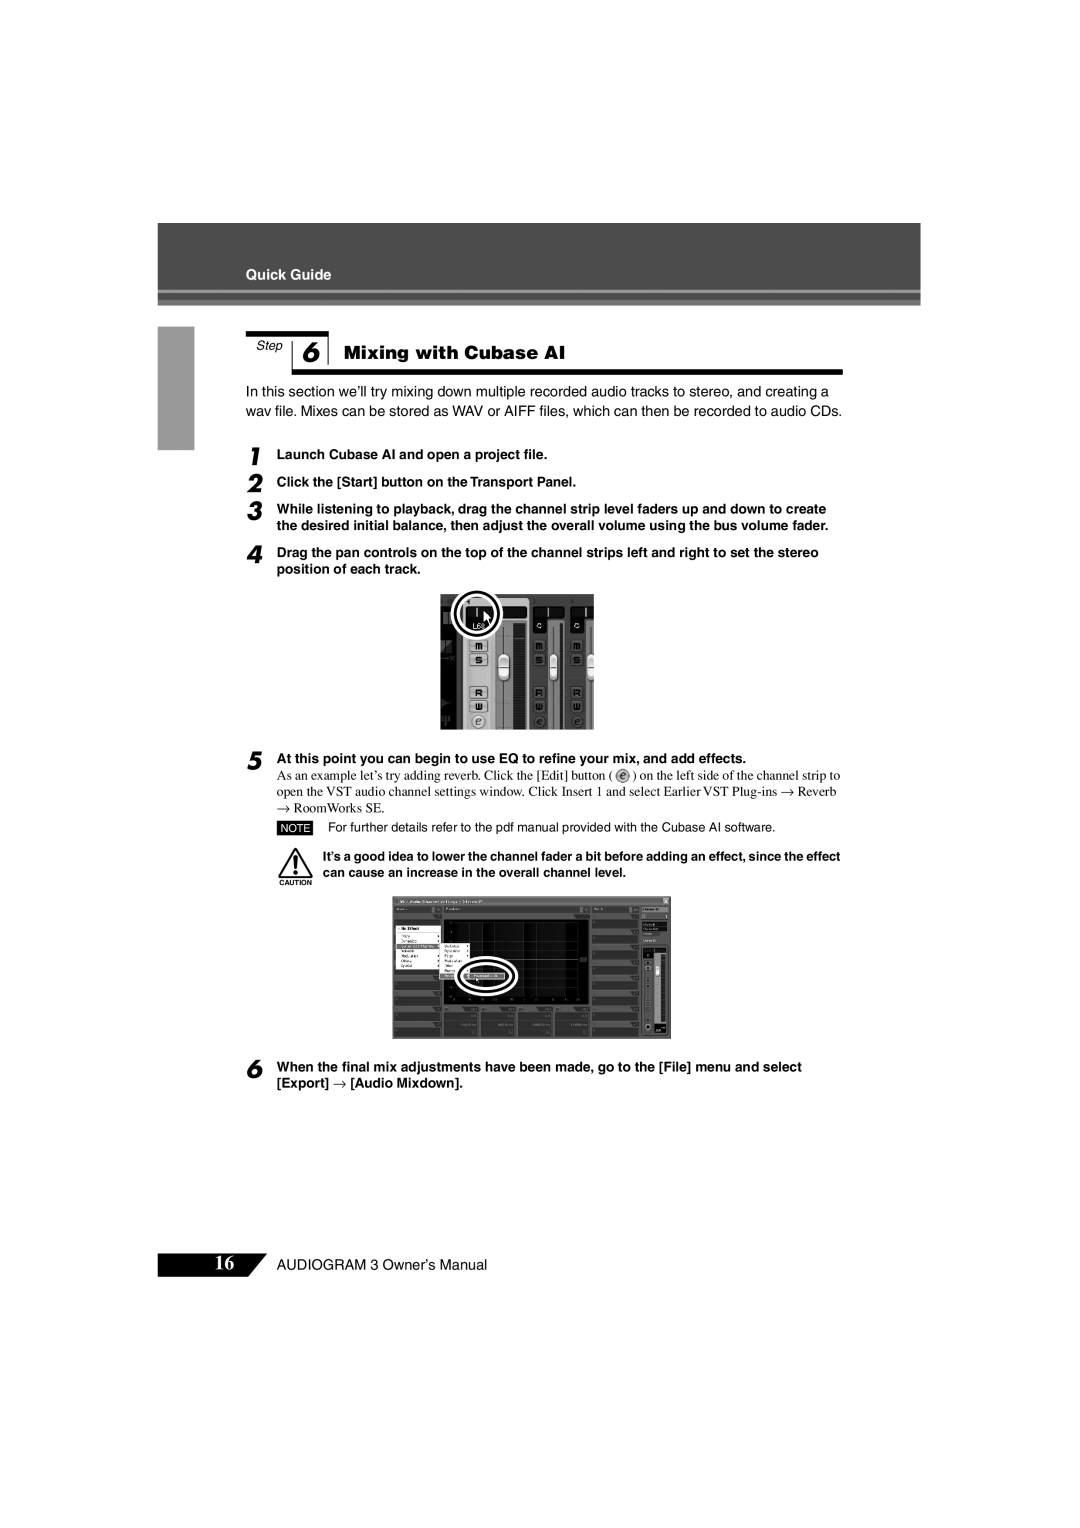 Yamaha Audiogram 3 owner manual 1 2 3, Mixing with Cubase AI, Quick Guide 